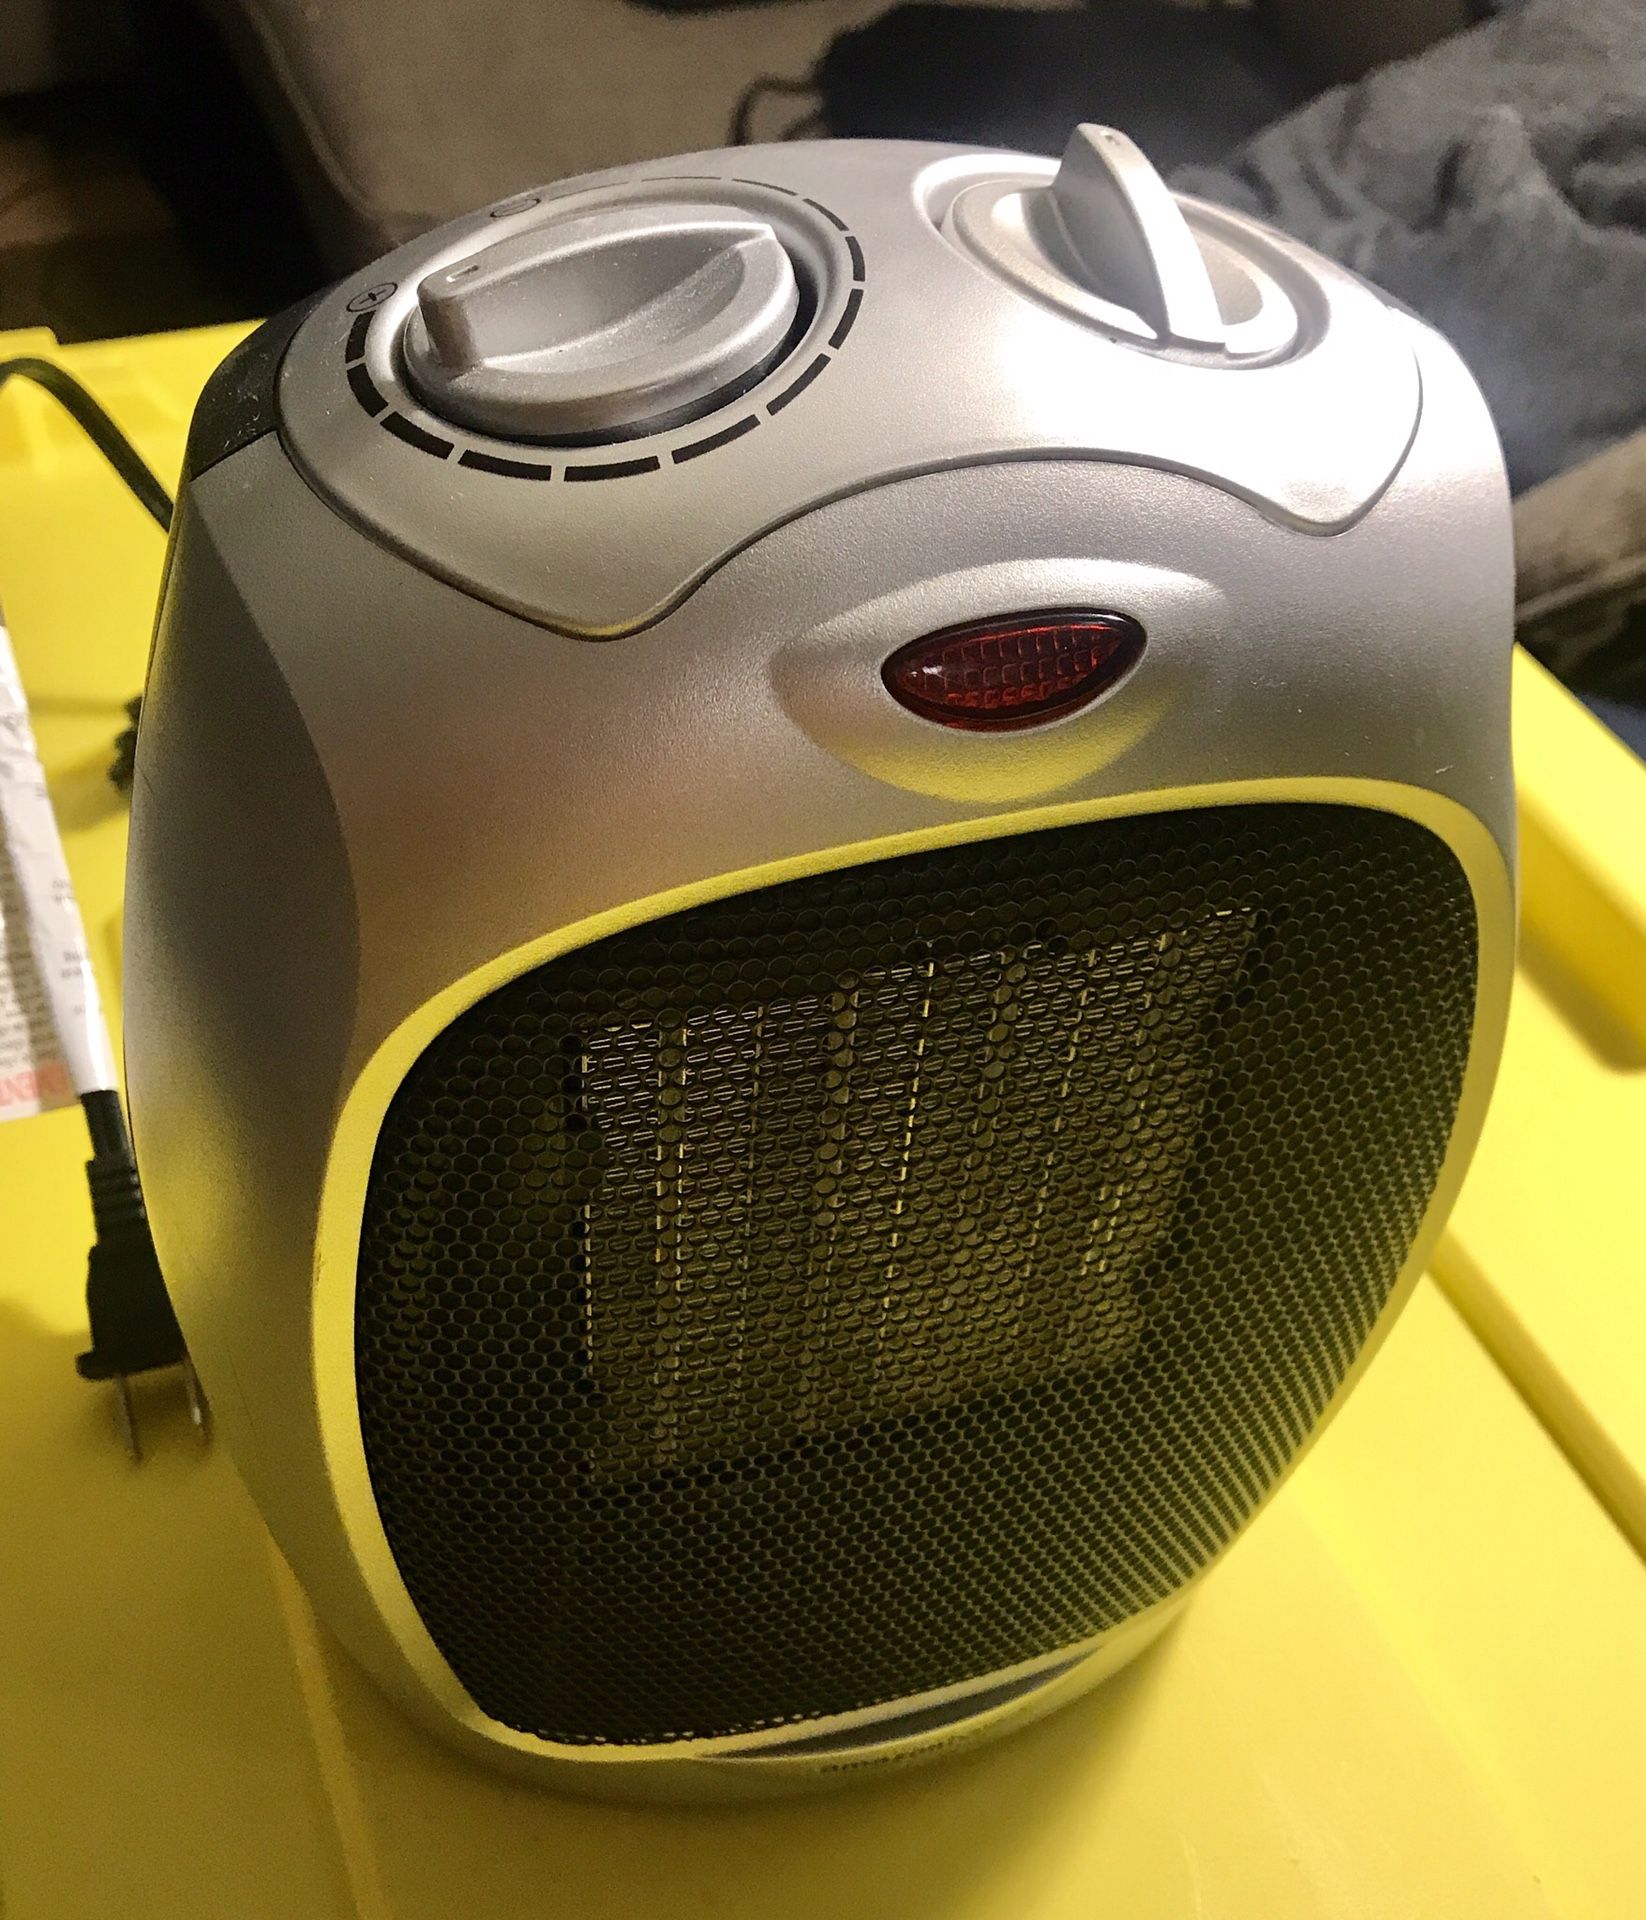 Portable Space Heater - Amazon Basics